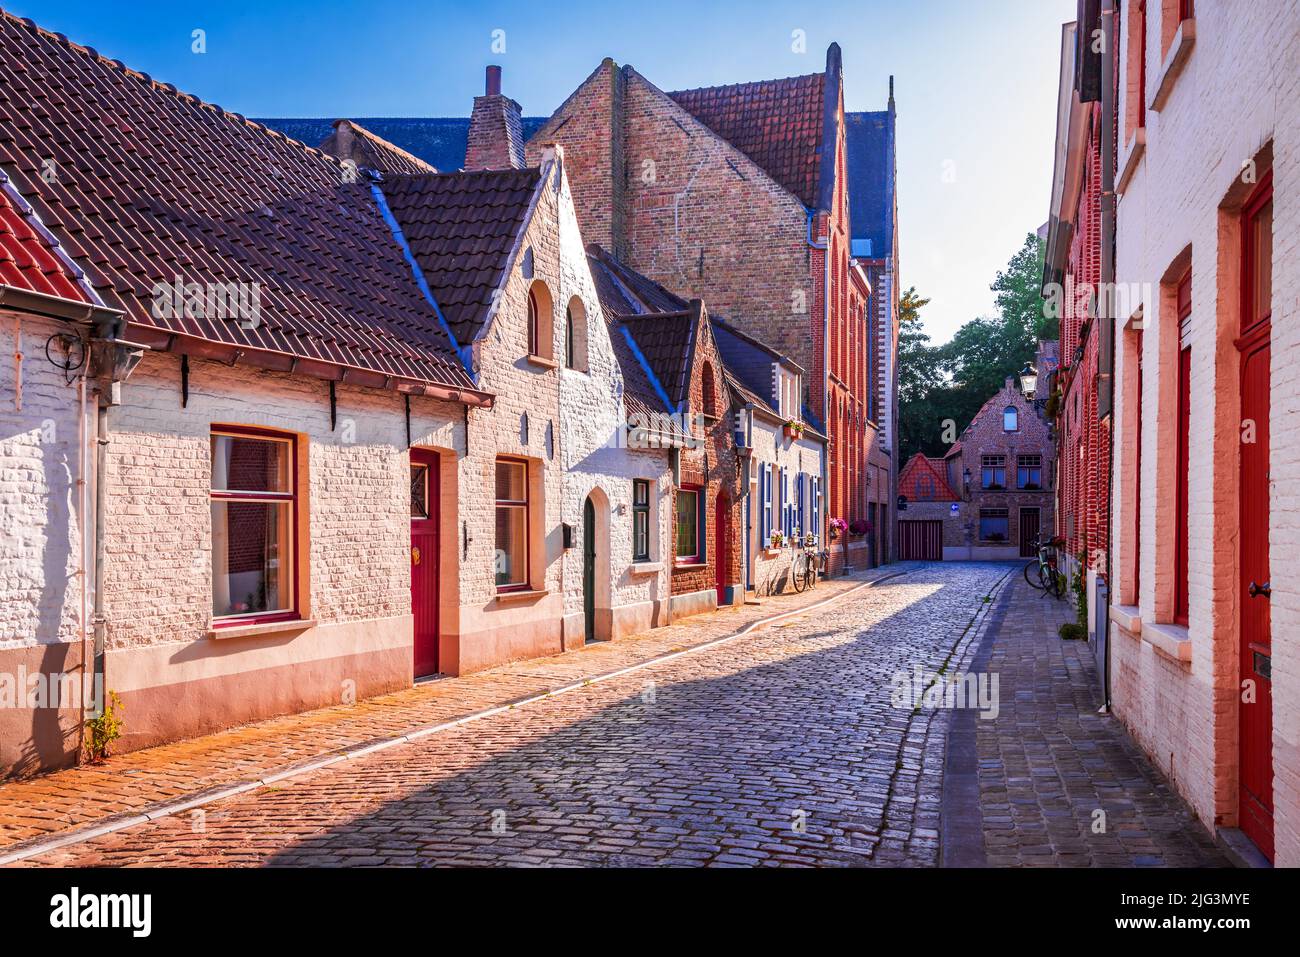 Bruges, Belgio. Strada acciottolata medievale di Brugge, antica città gotica belga delle Fiandre. Foto Stock